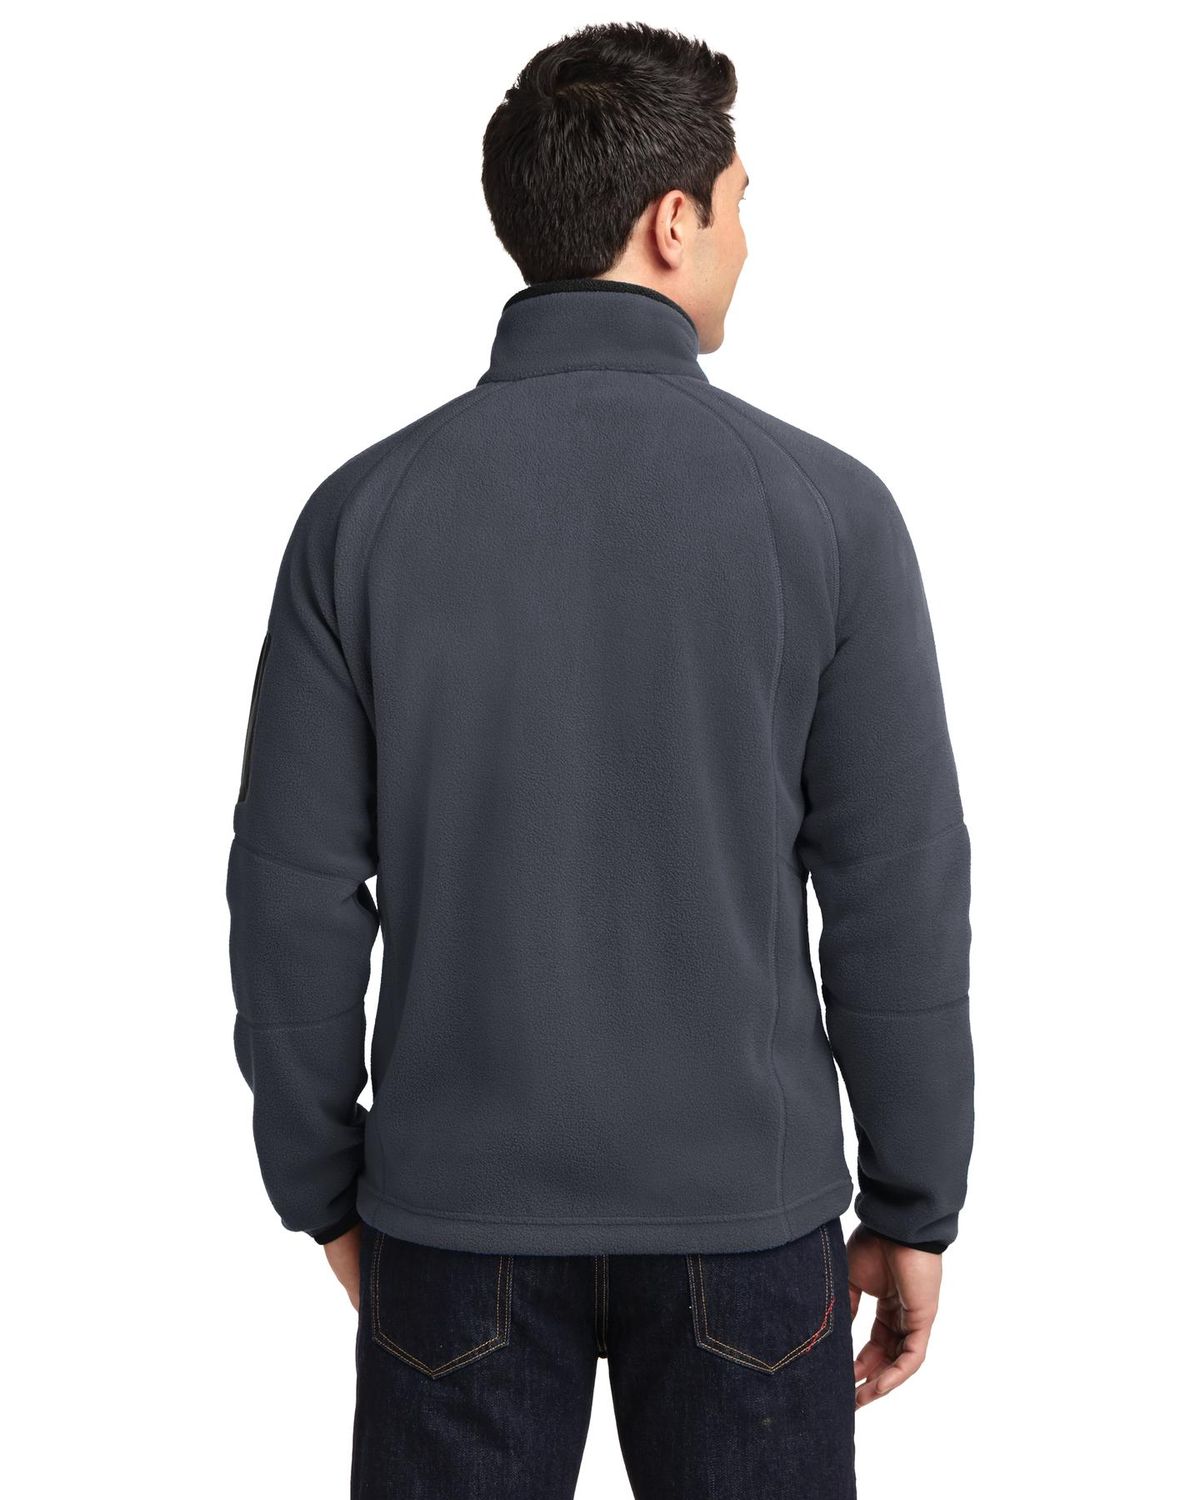 'Port Authority F229 Enhanced Value Fleece Full-Zip Jacket'